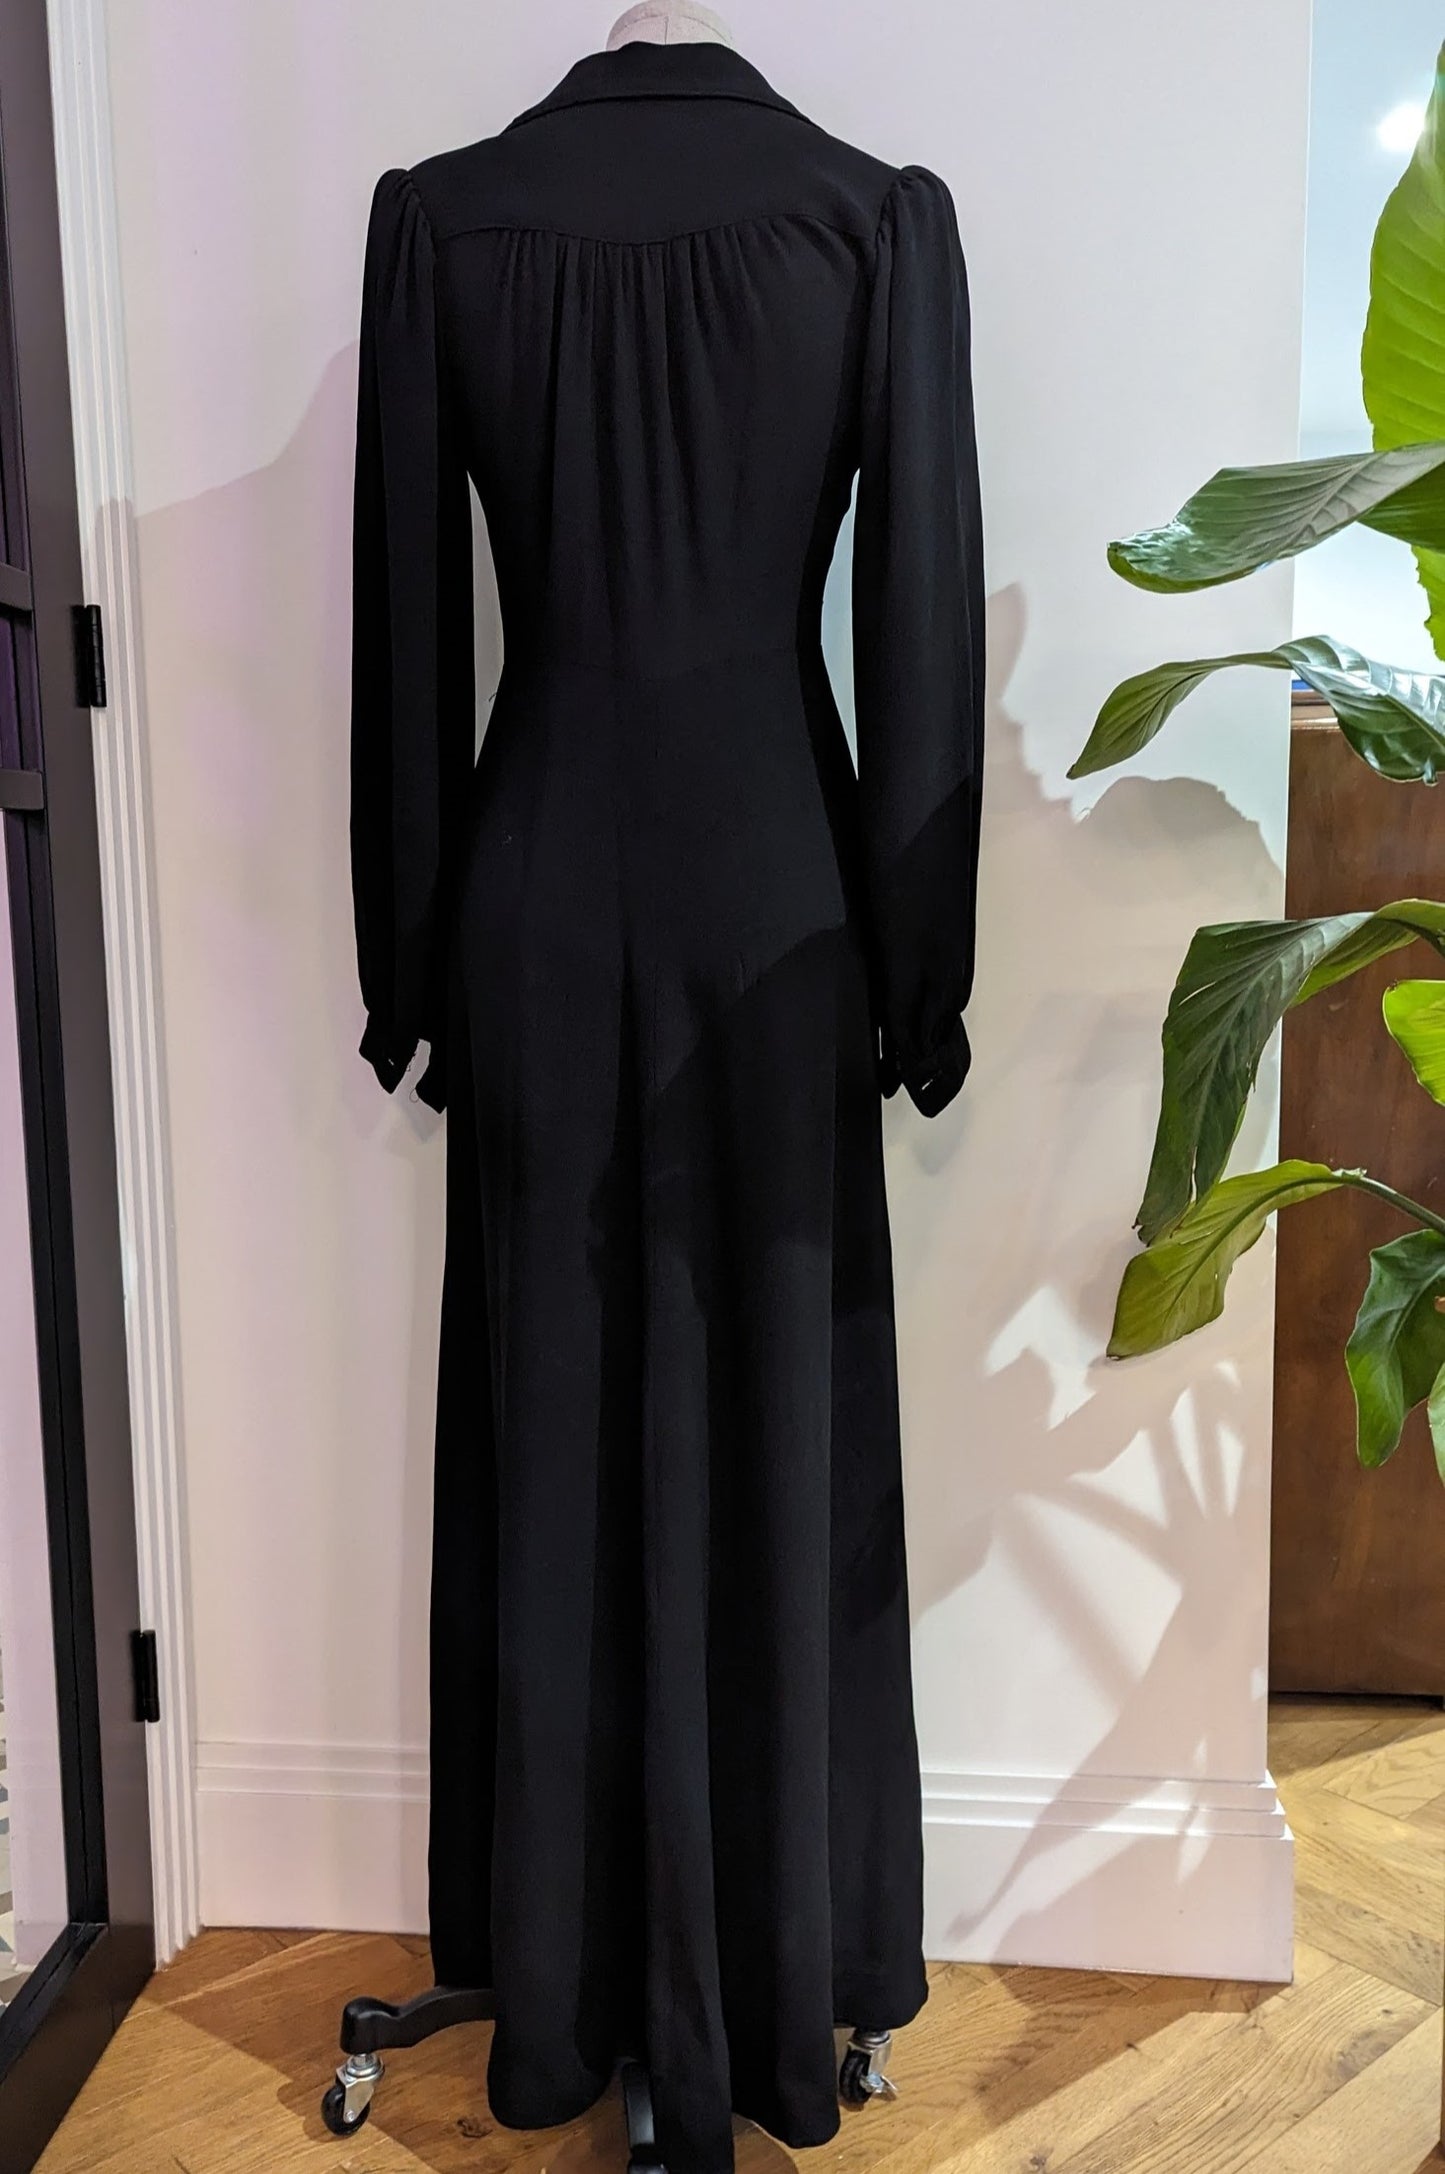 Ossie Clark black crepe long dress from back